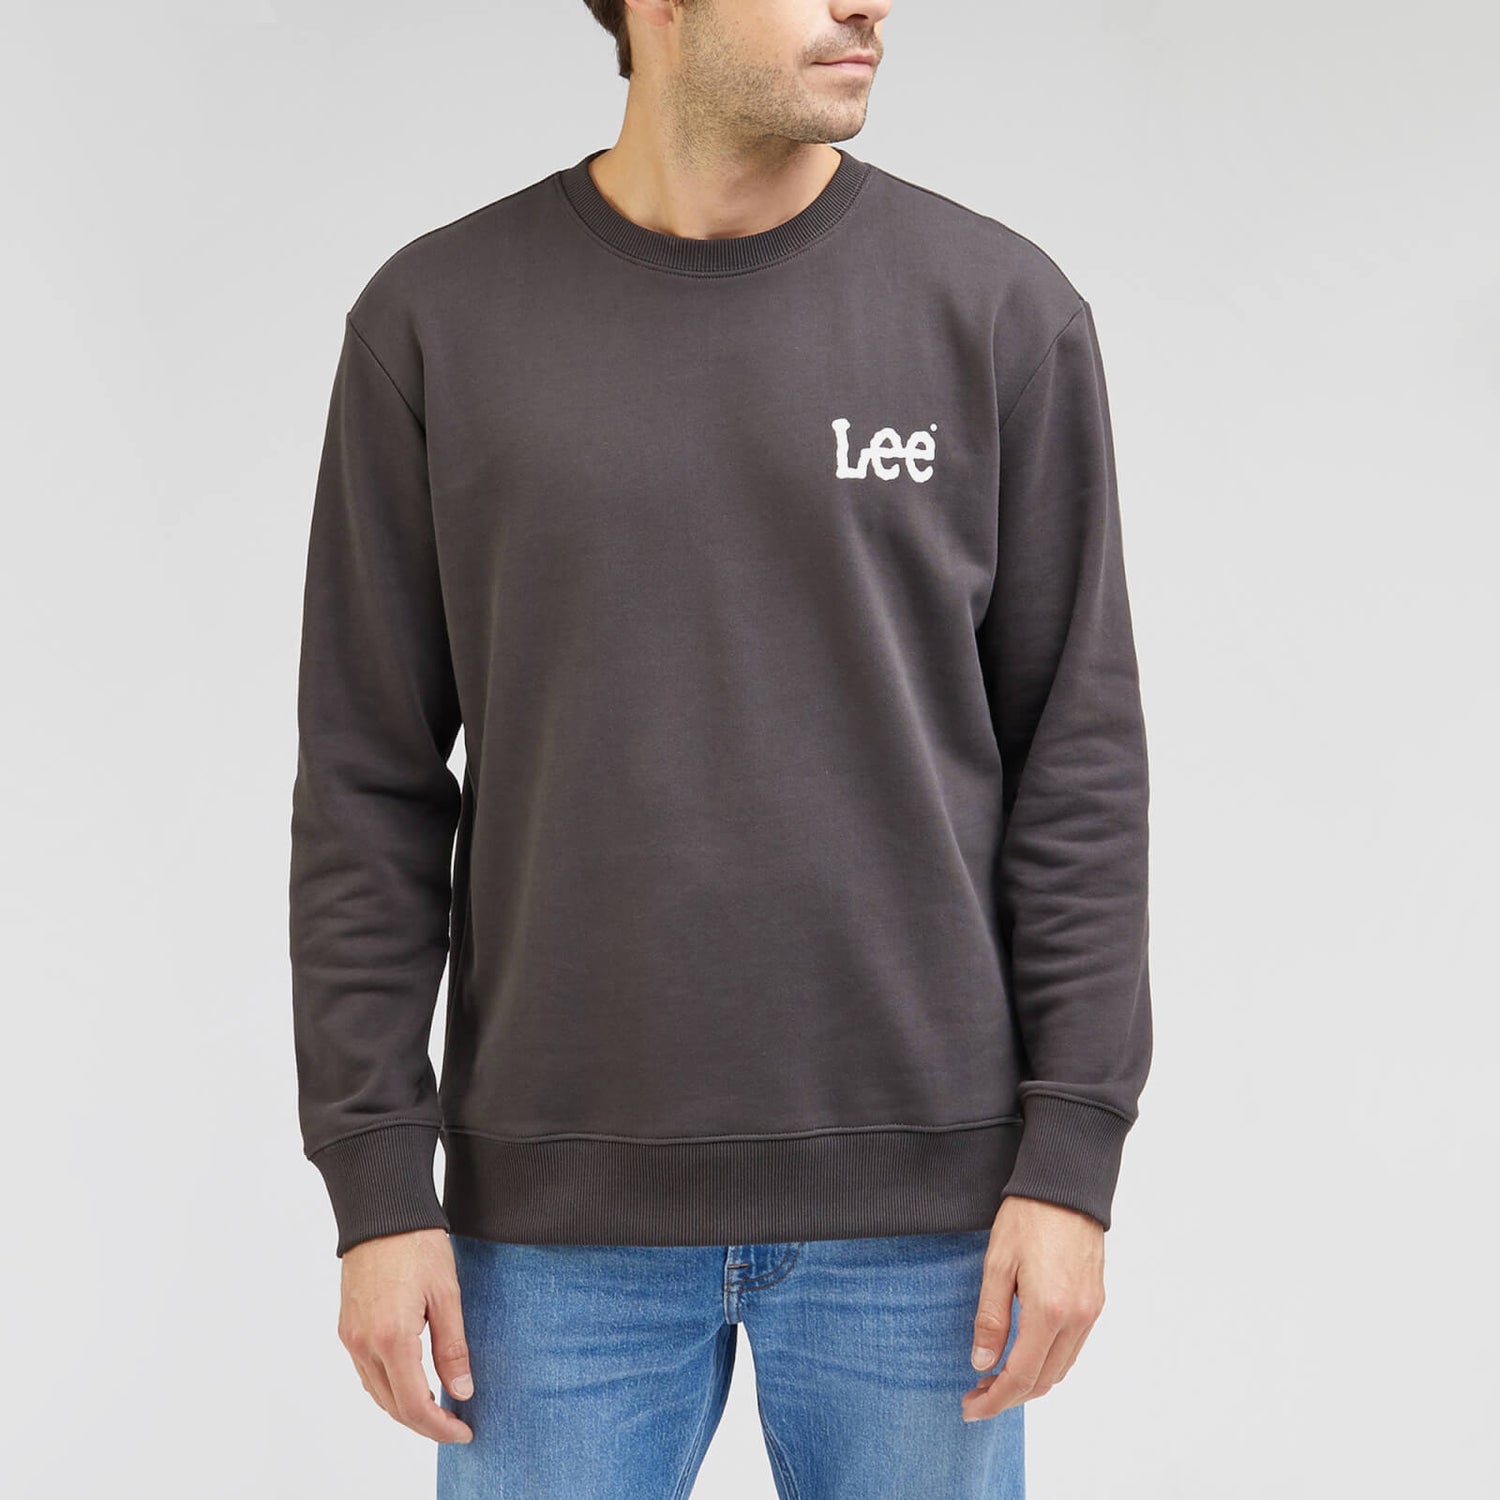 Lee Wobbly Logo Cotton Sweatshirt - S